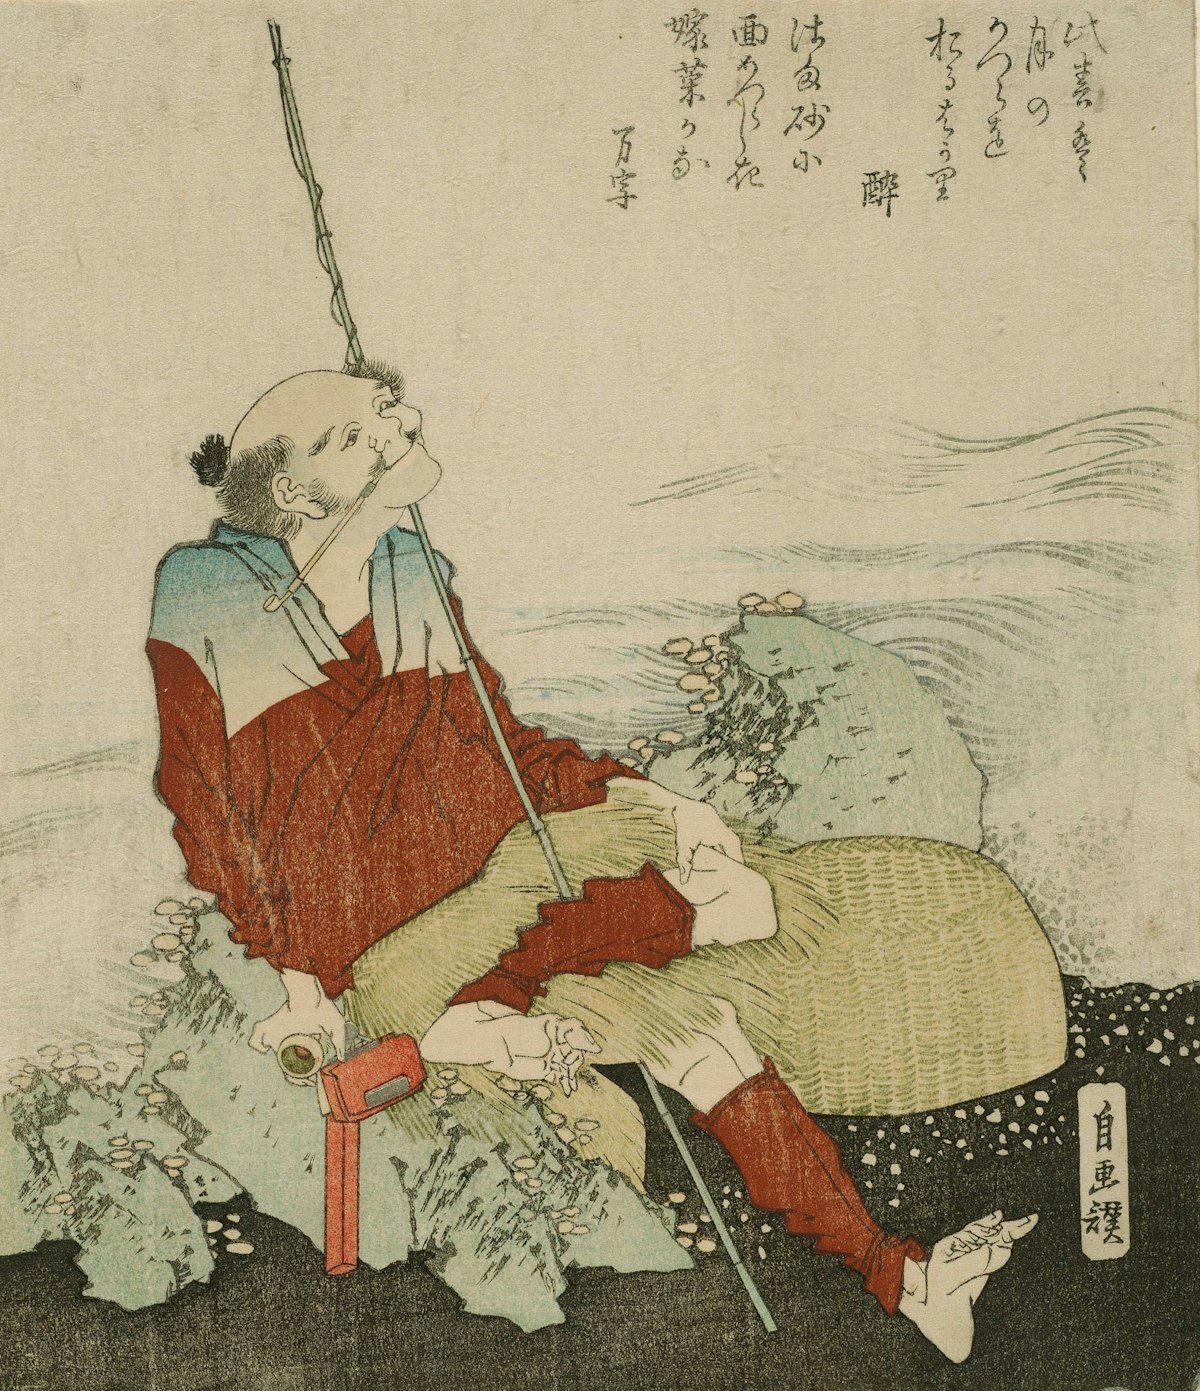 Katsushika Hokusai  The Art Institute of Chicago